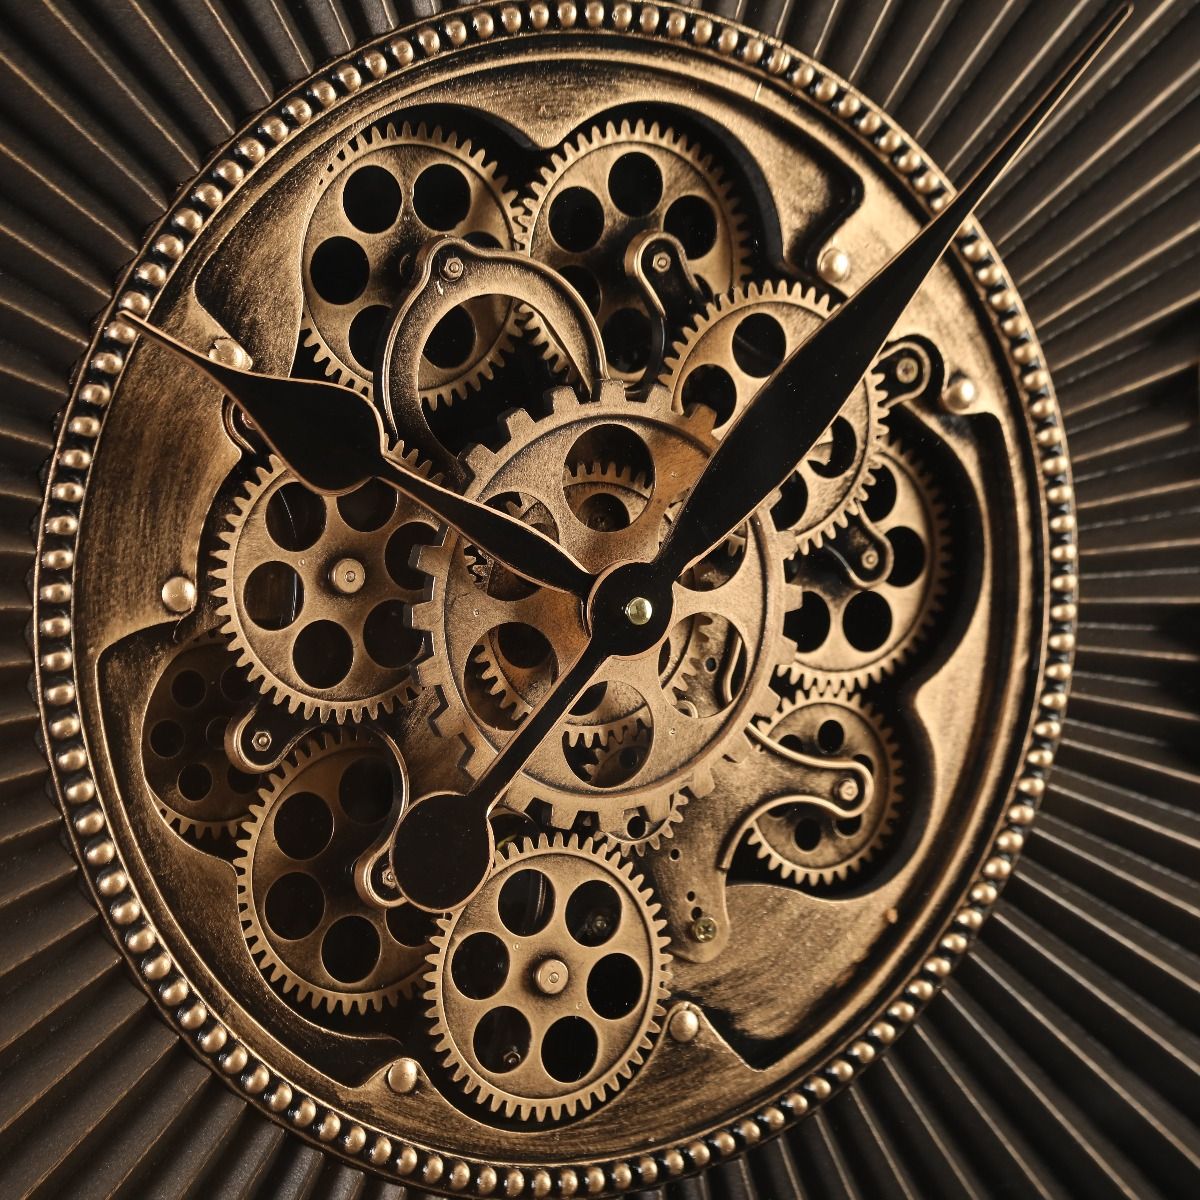 Industrial/vintage-inspired clock range - MODEL 019